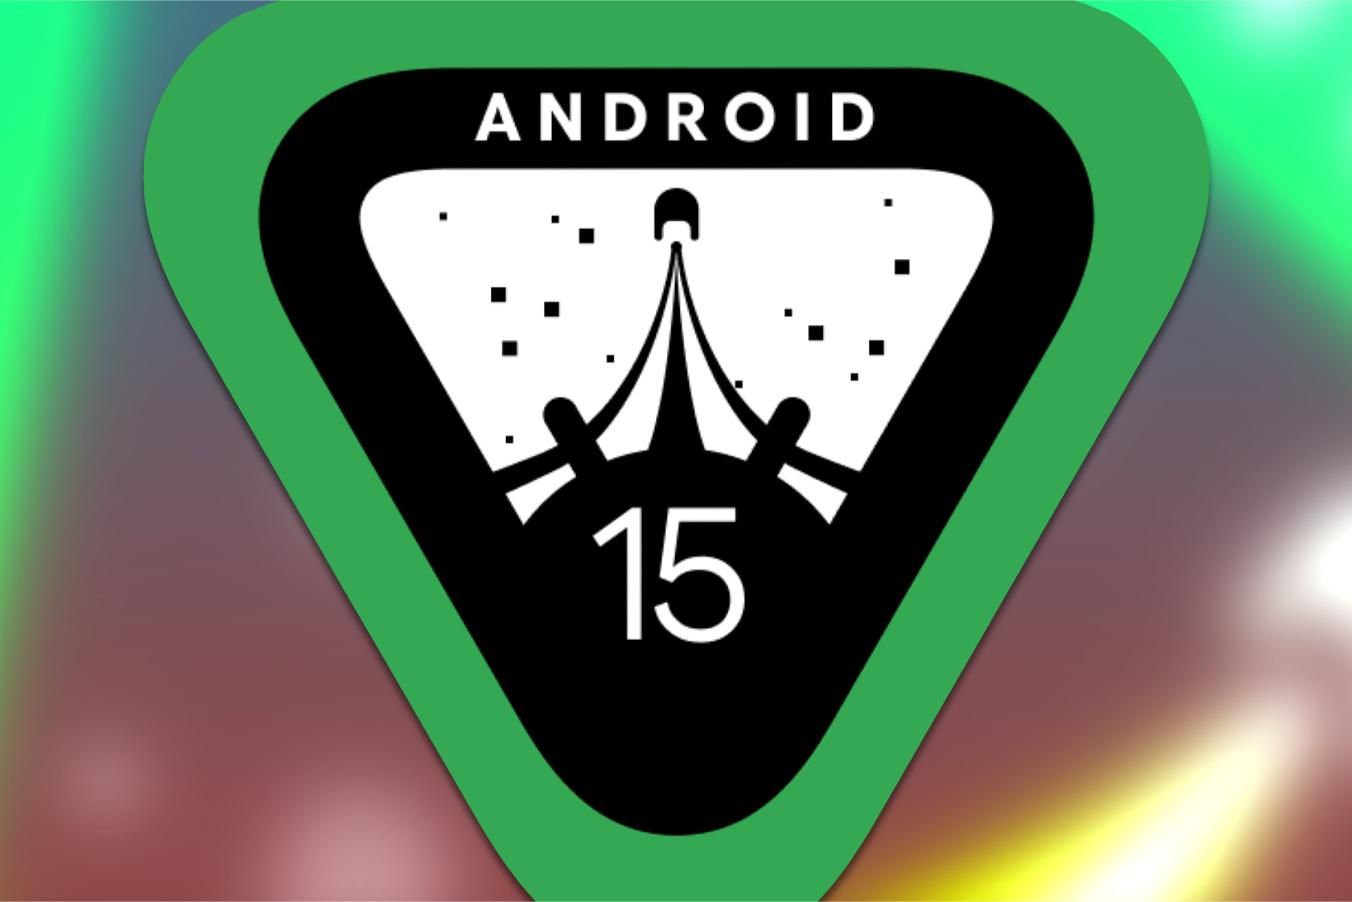 android-15-herói-do-crachá-preto-oficial